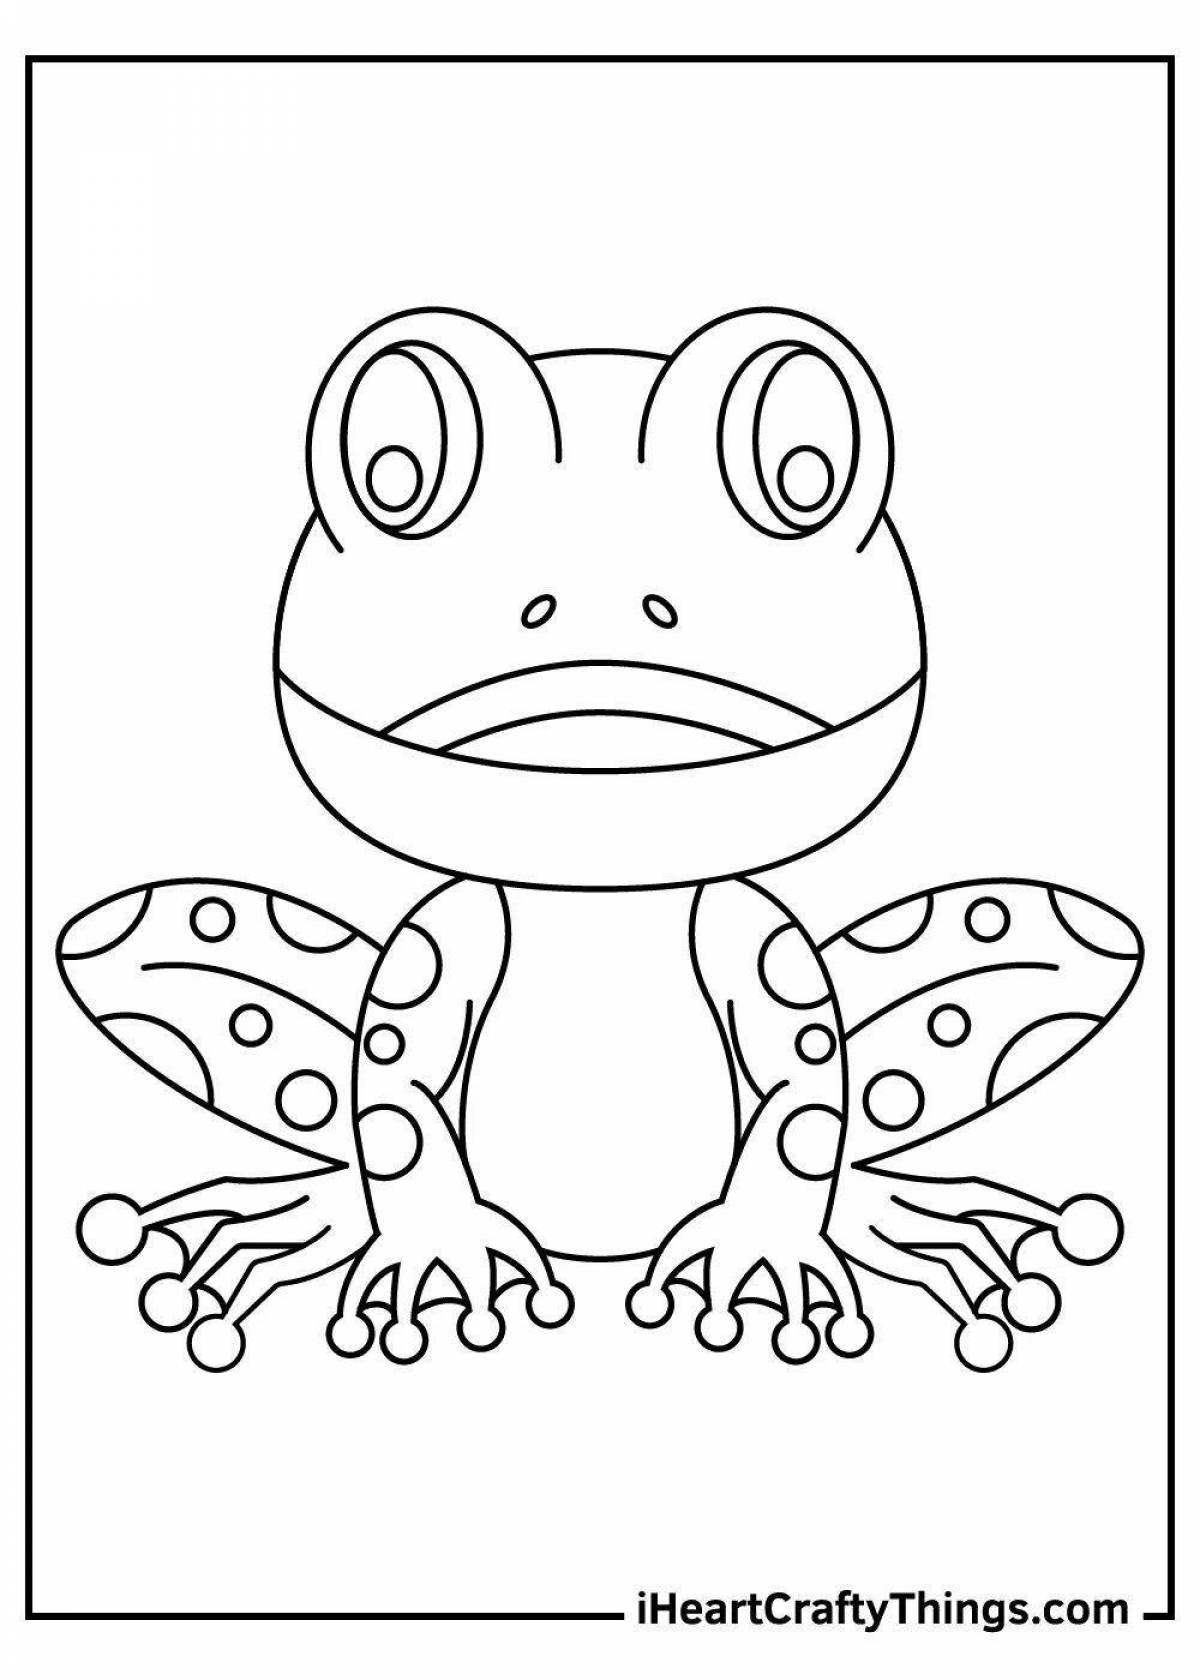 Amanita frog coloring page